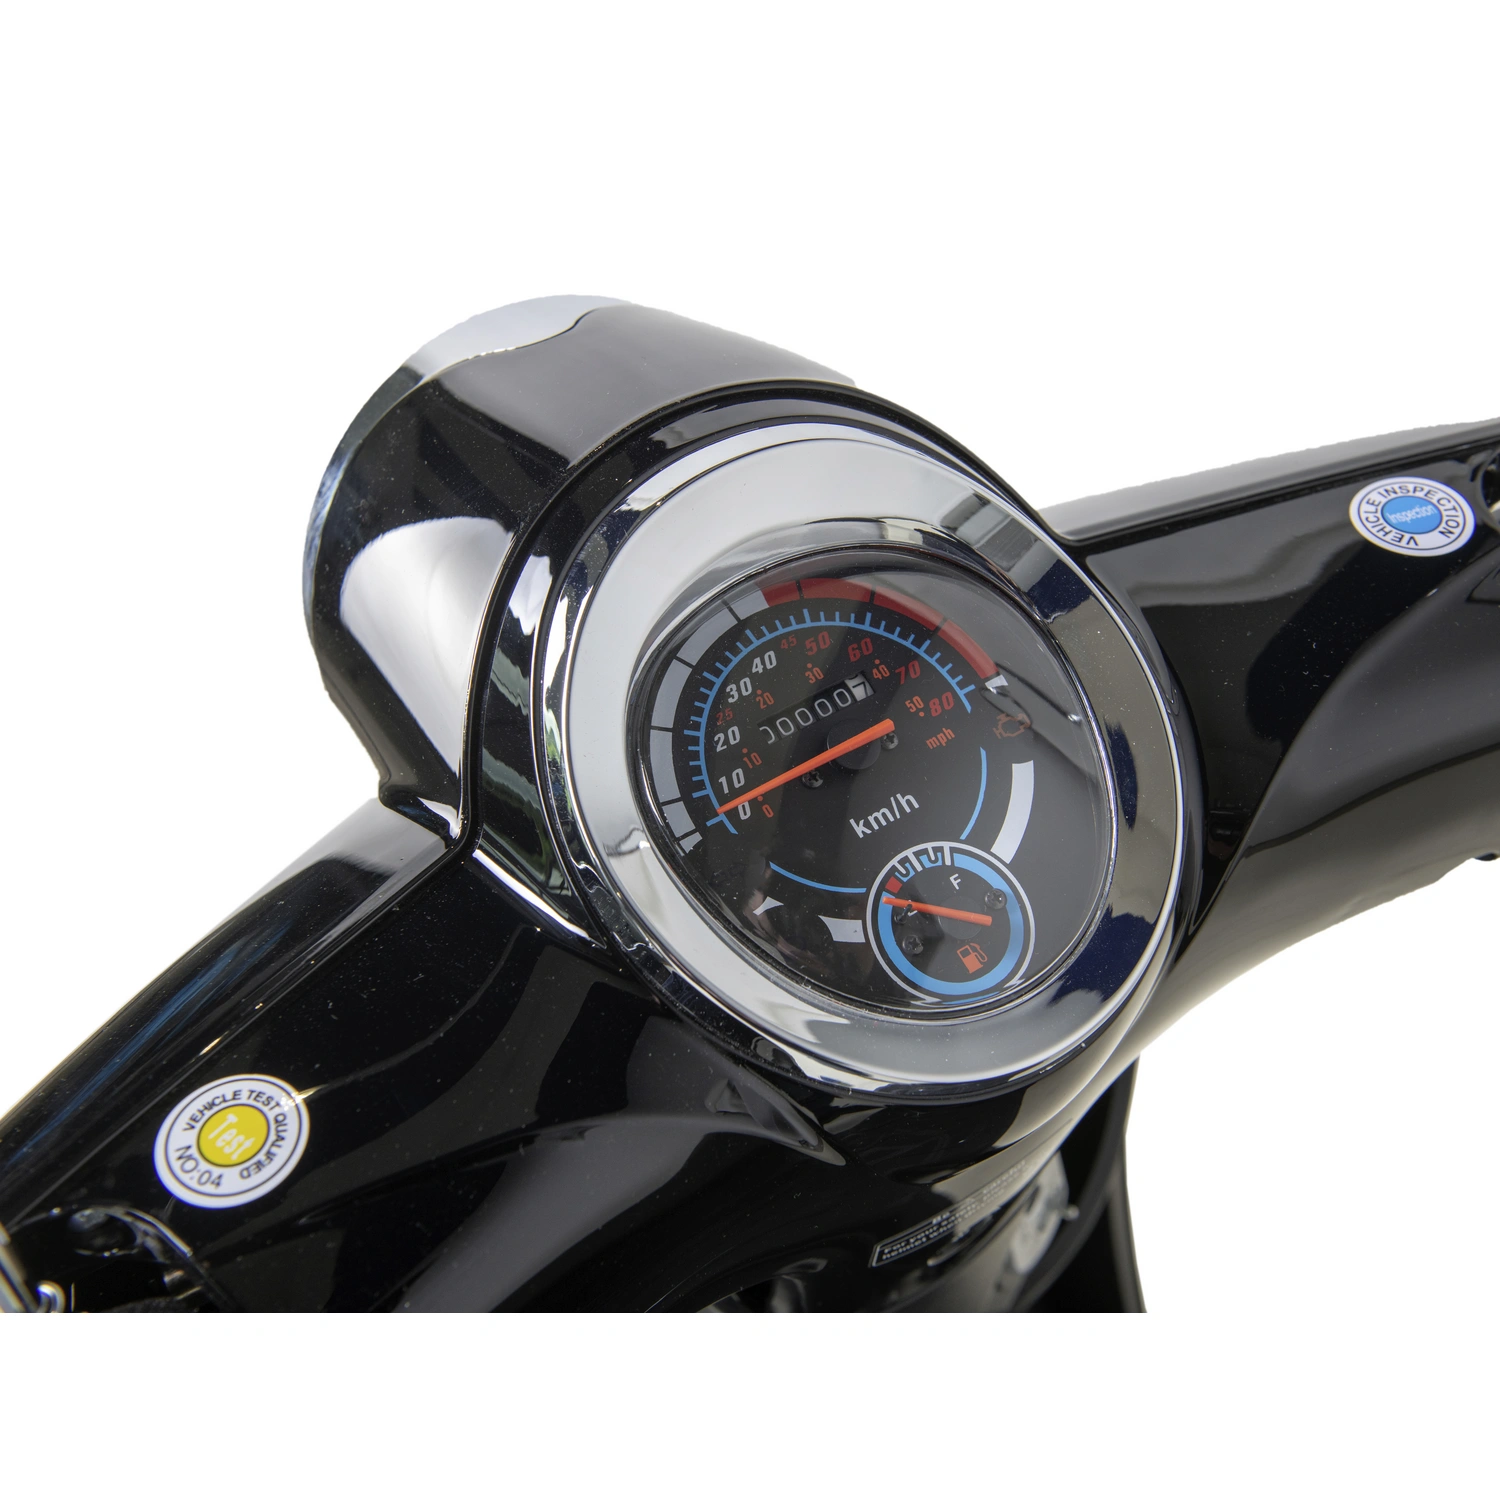 GT UNION Motorroller »Massimo«, 50 Euro cm³, 5 km/h, 45